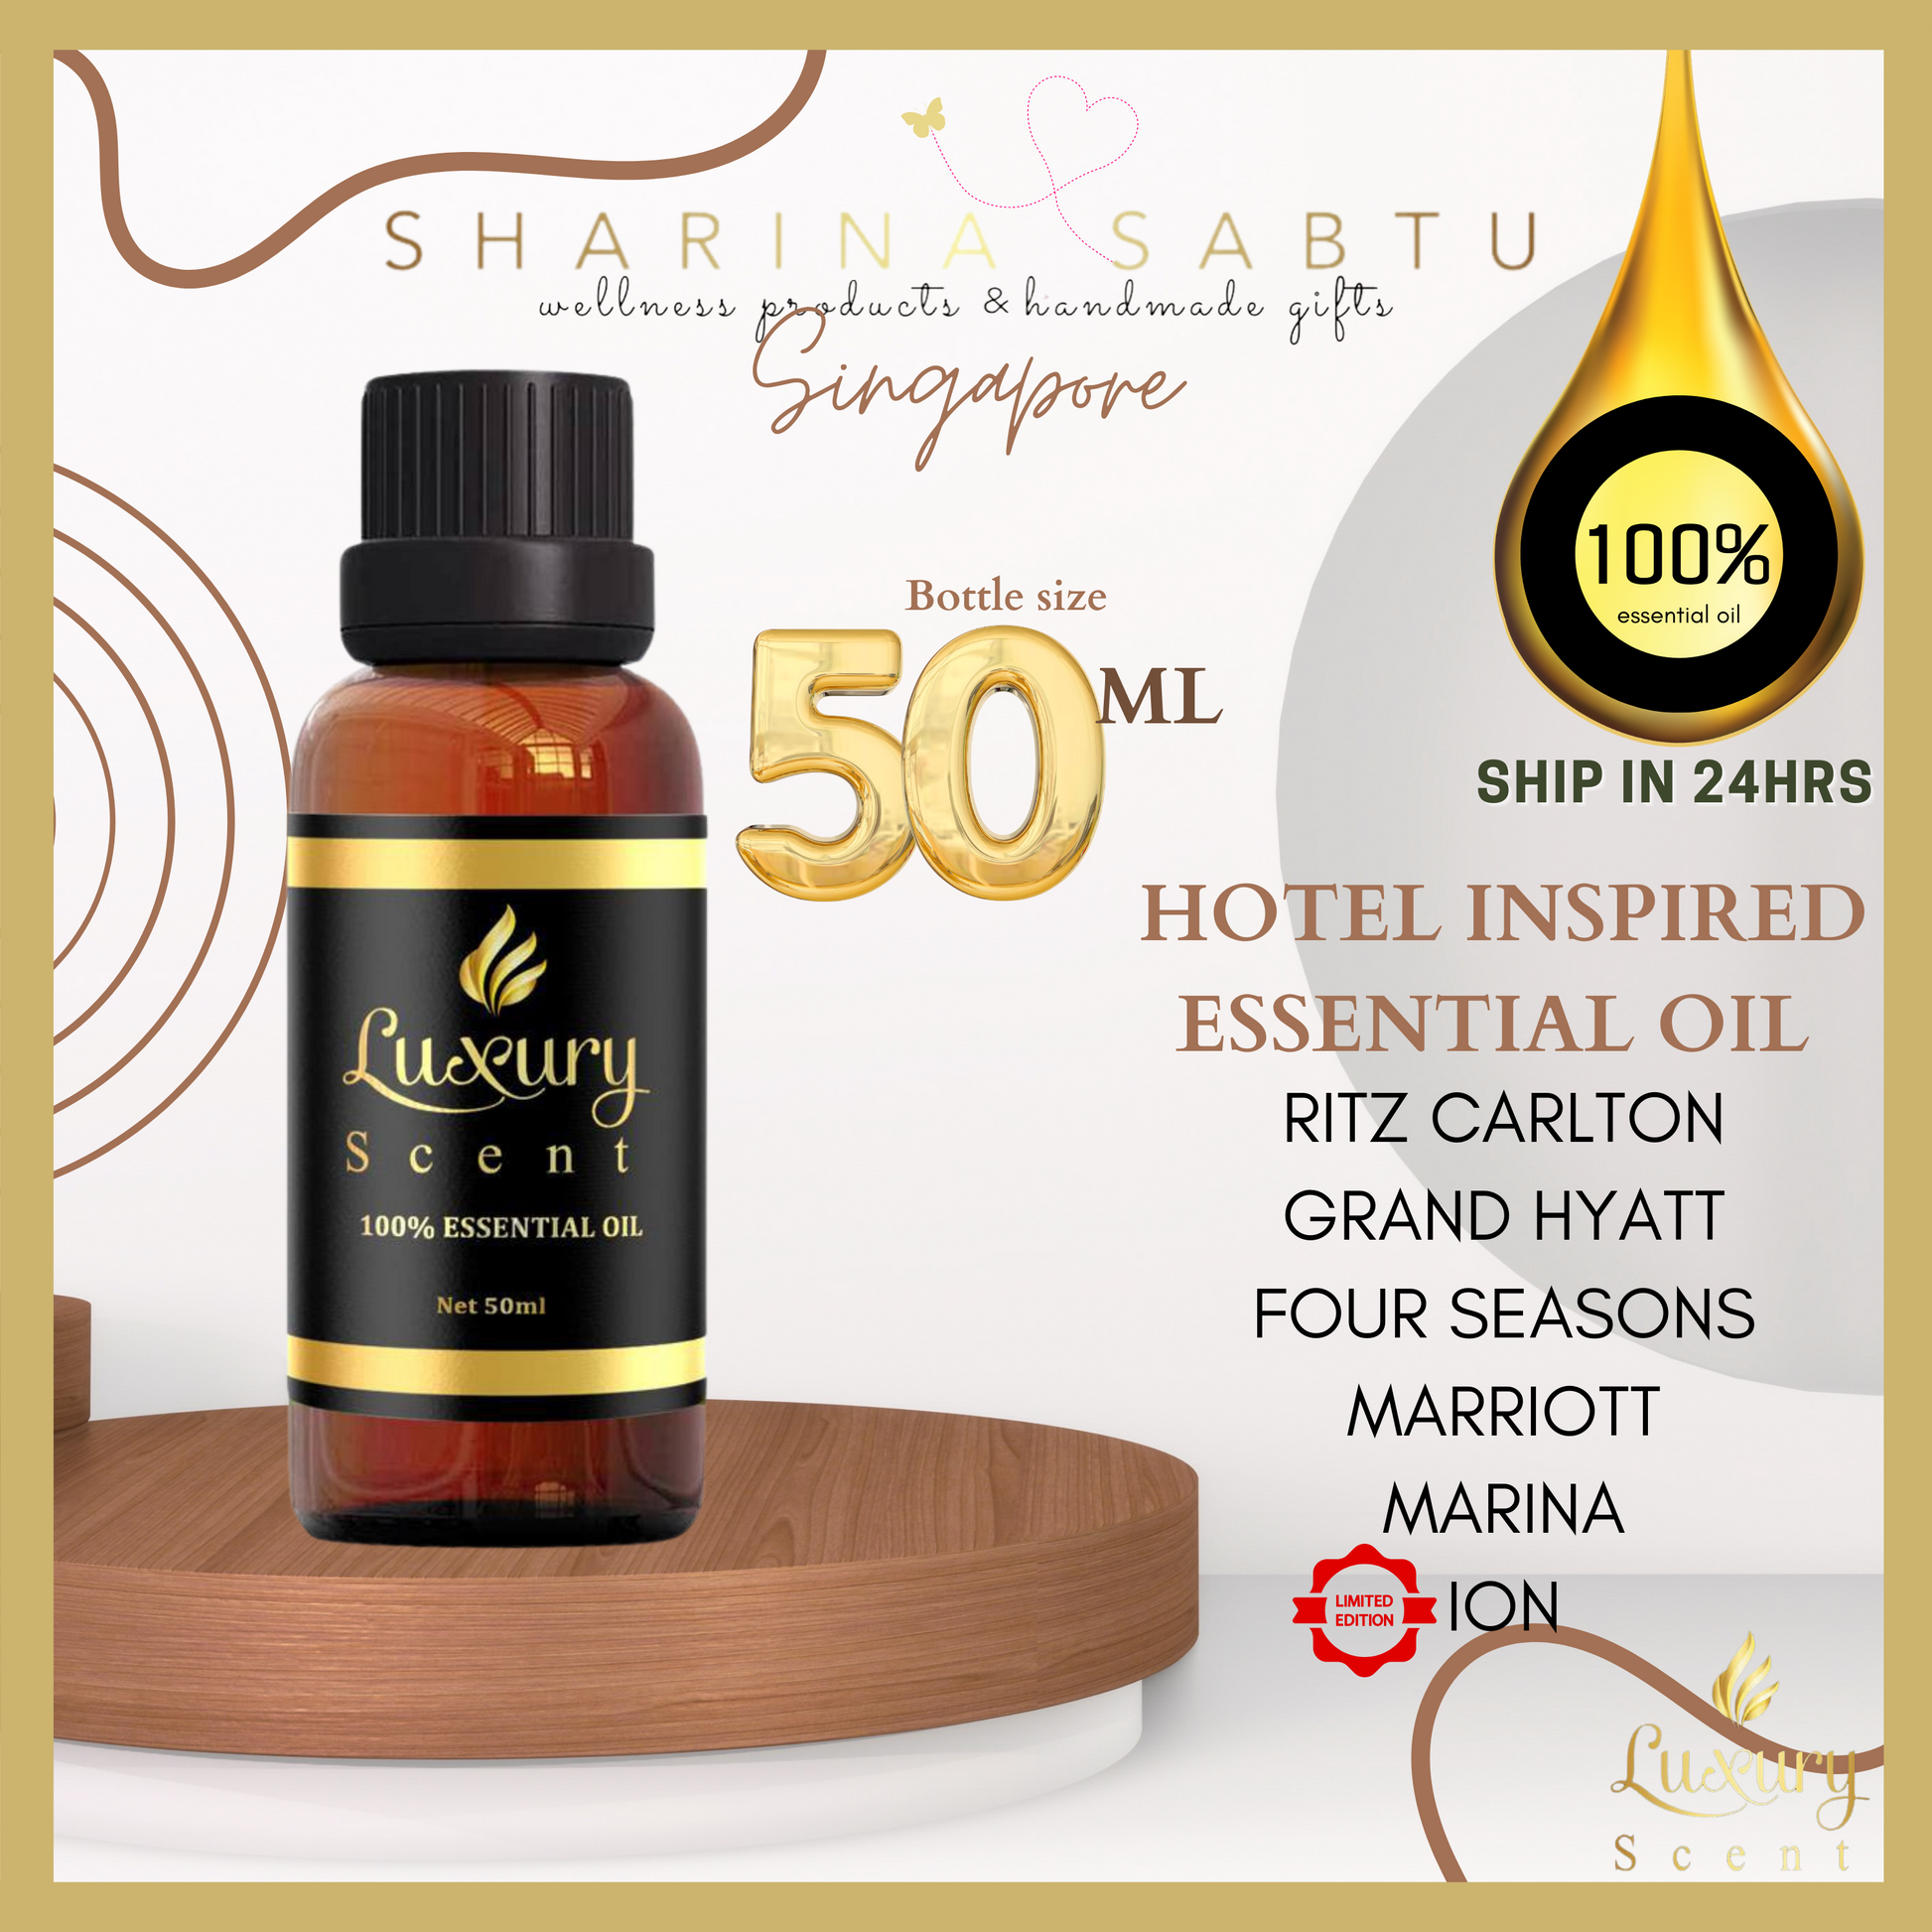 Hotel Scent Essential Oil 